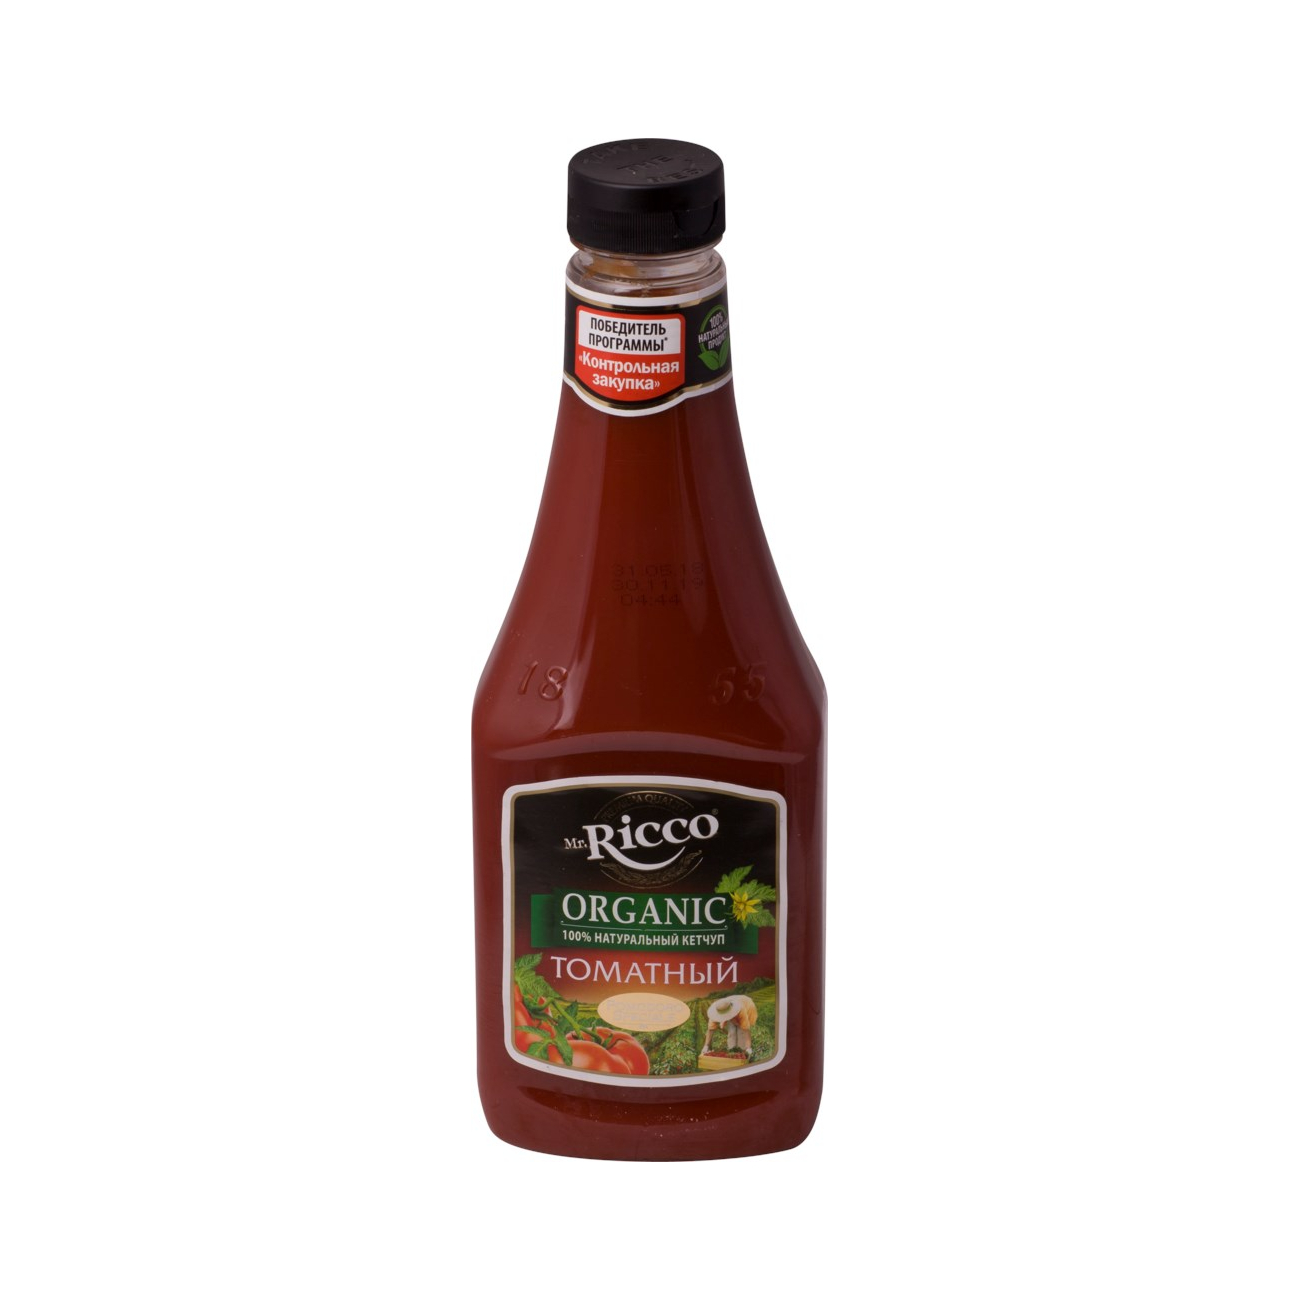 Кетчуп Mr.Ricco Томатный 940 г кетчуп heinz томатный с укропом и петрушкой 320 г